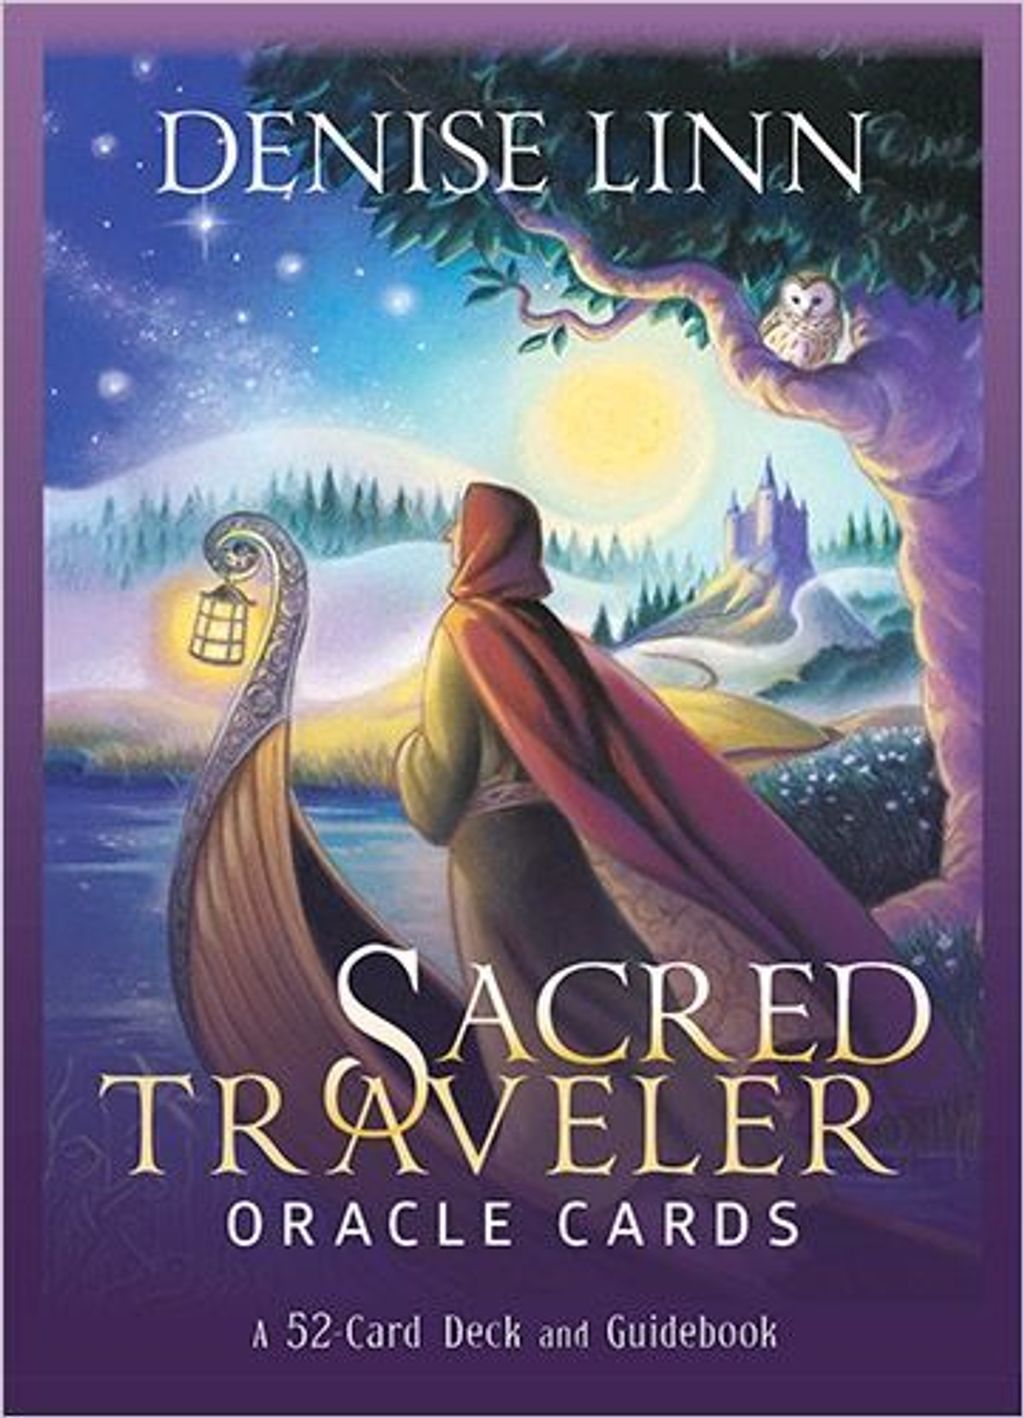 崇聖旅者神諭卡：Sacred Traveler Oracle Cards.jpg